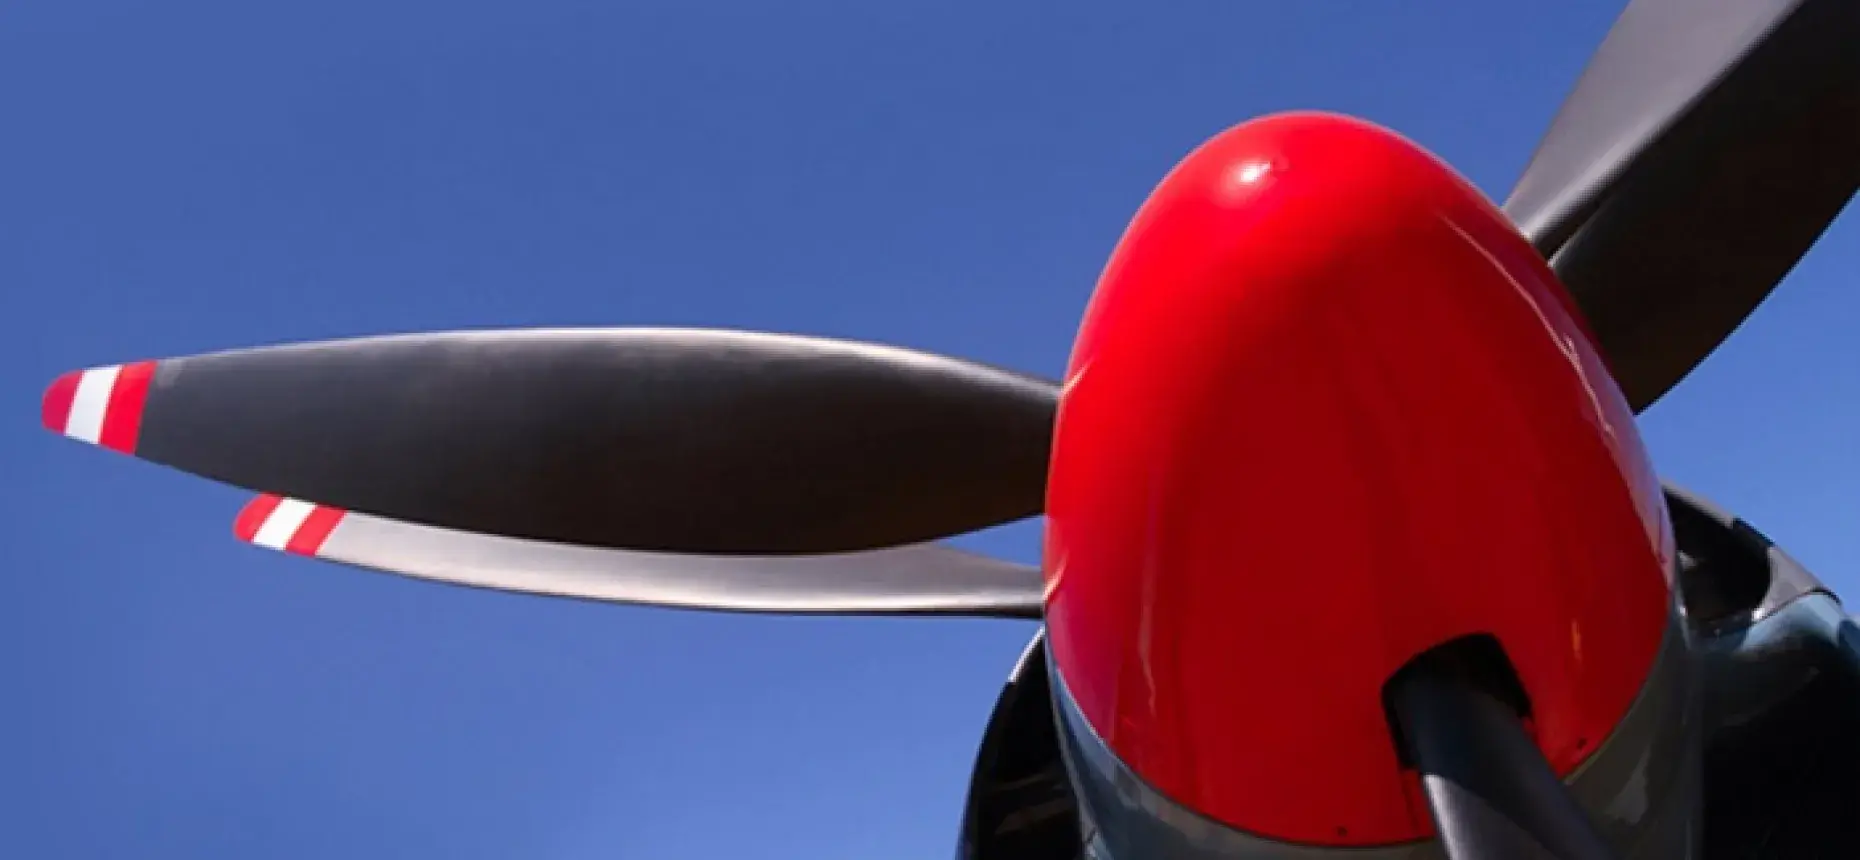 red propeller